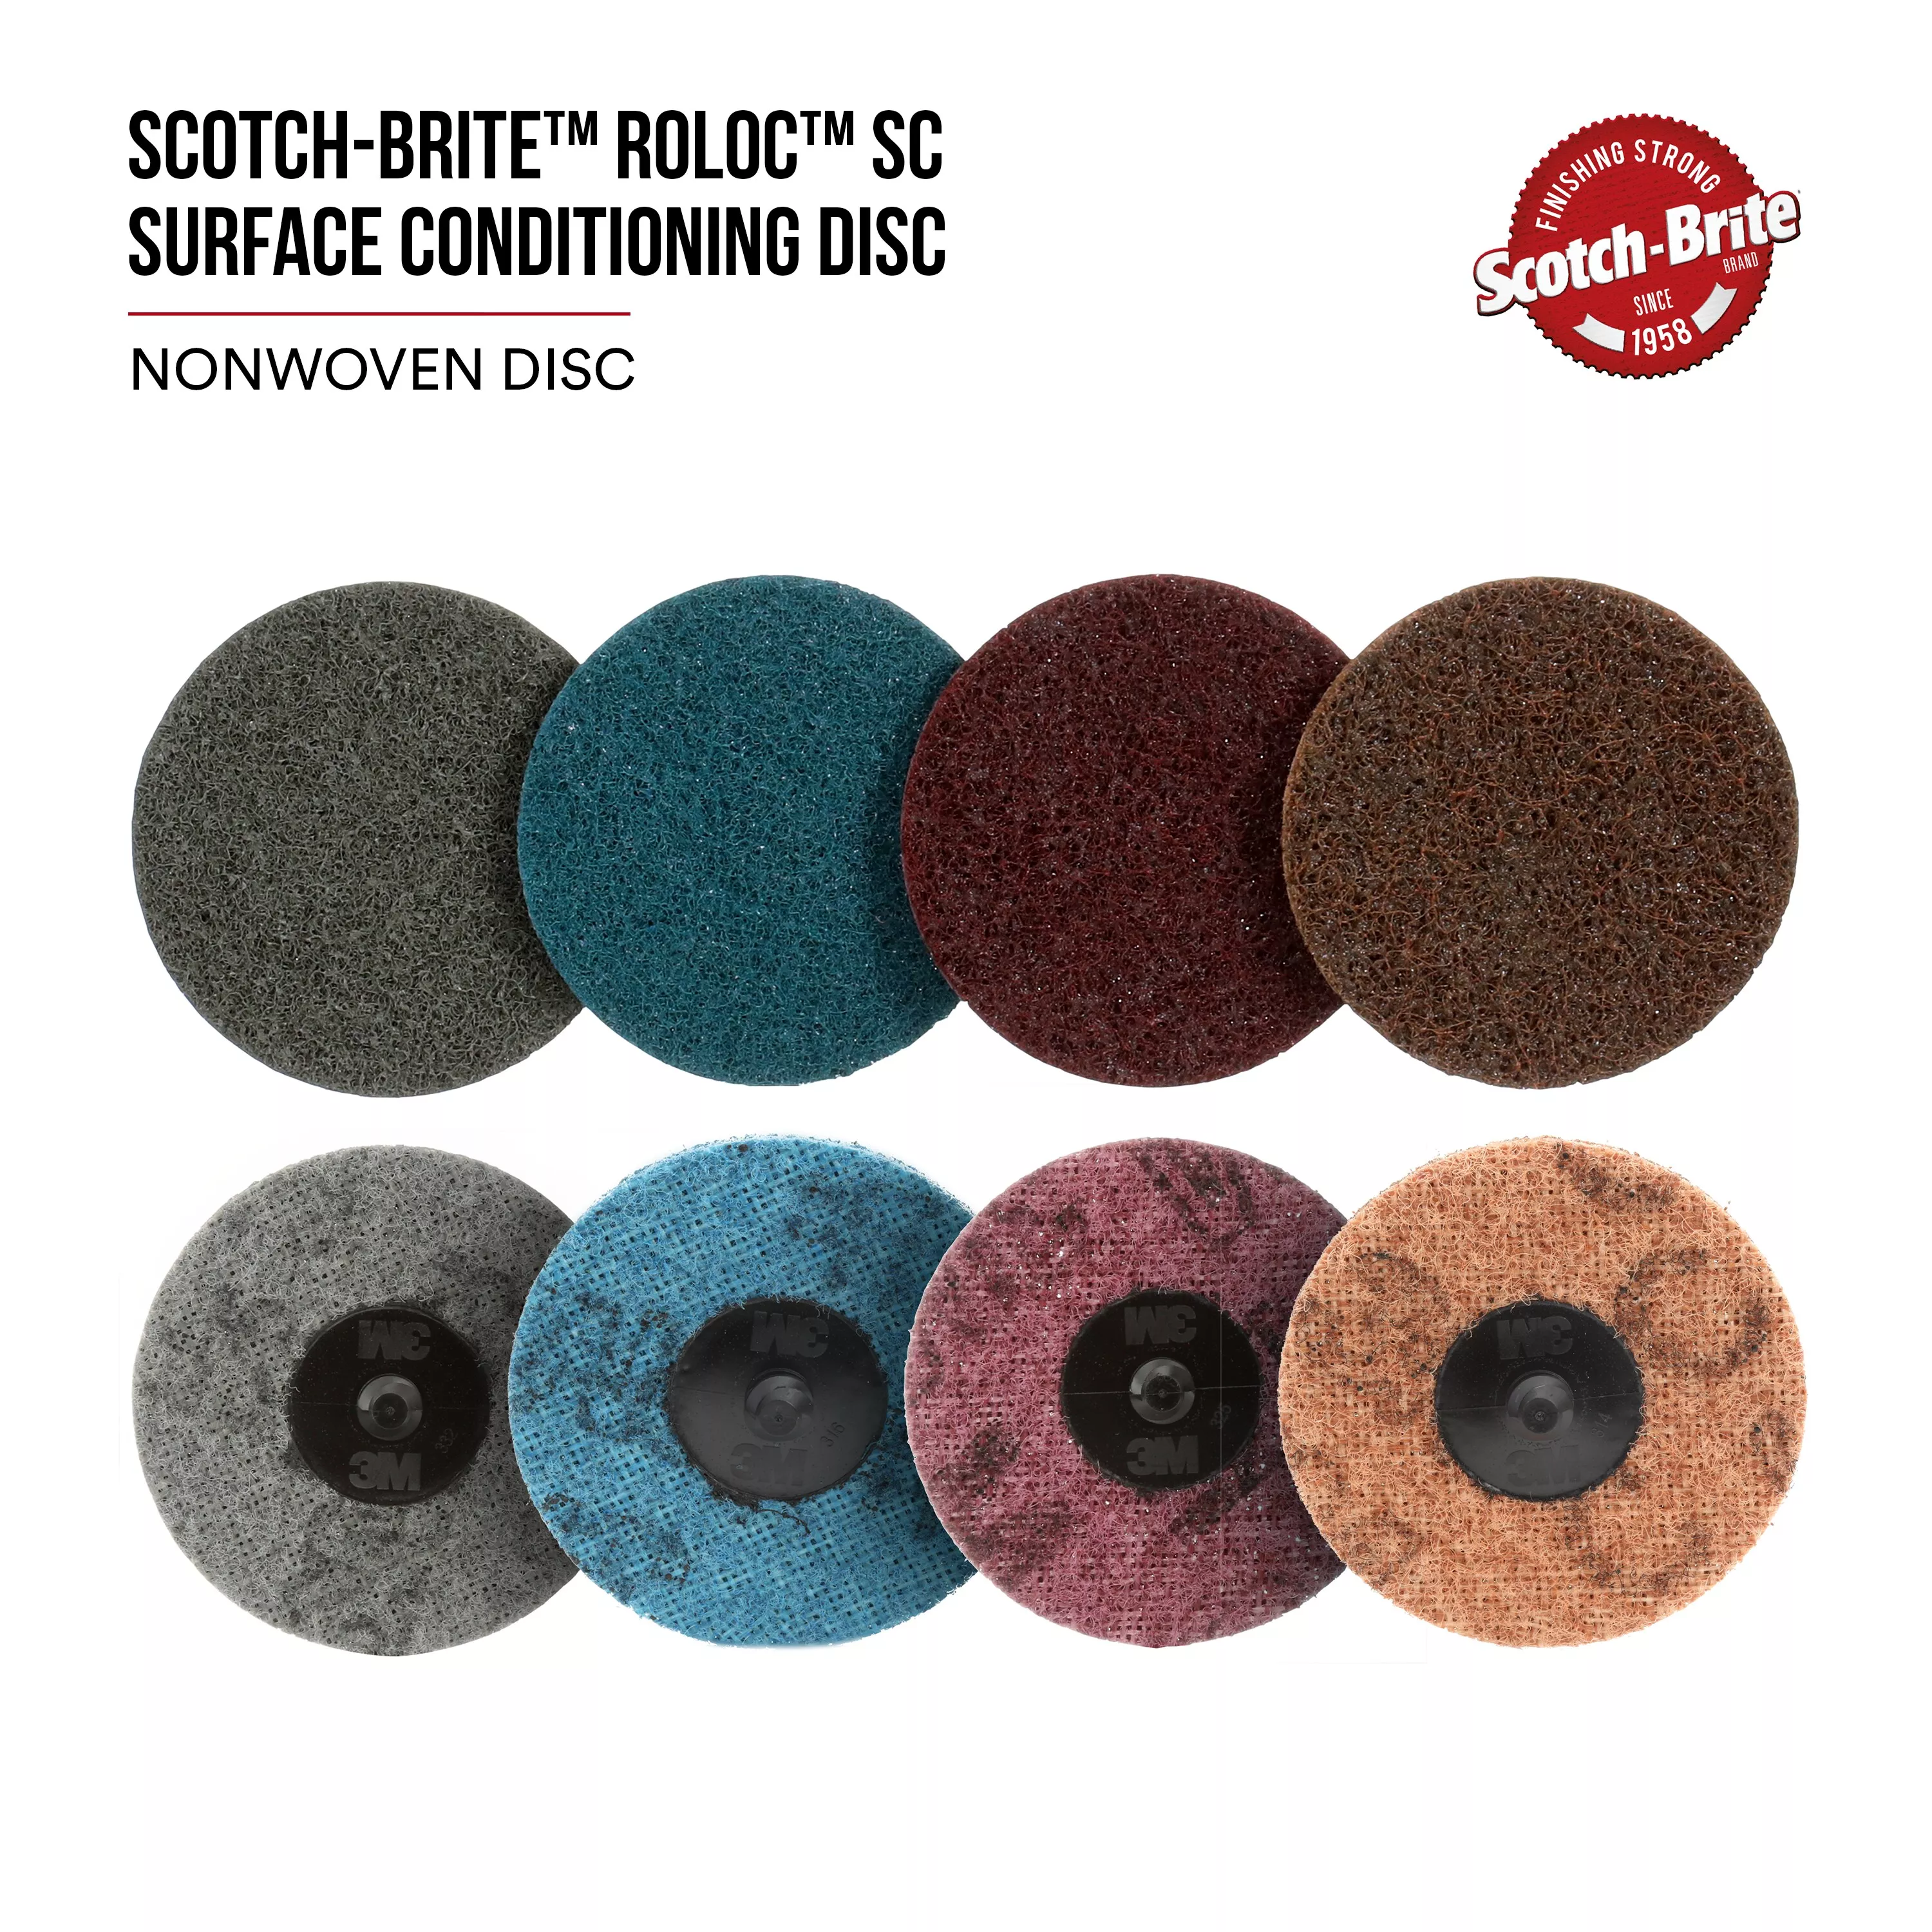 SKU 7010292394 | Scotch-Brite™ Roloc™ Surface Conditioning Disc